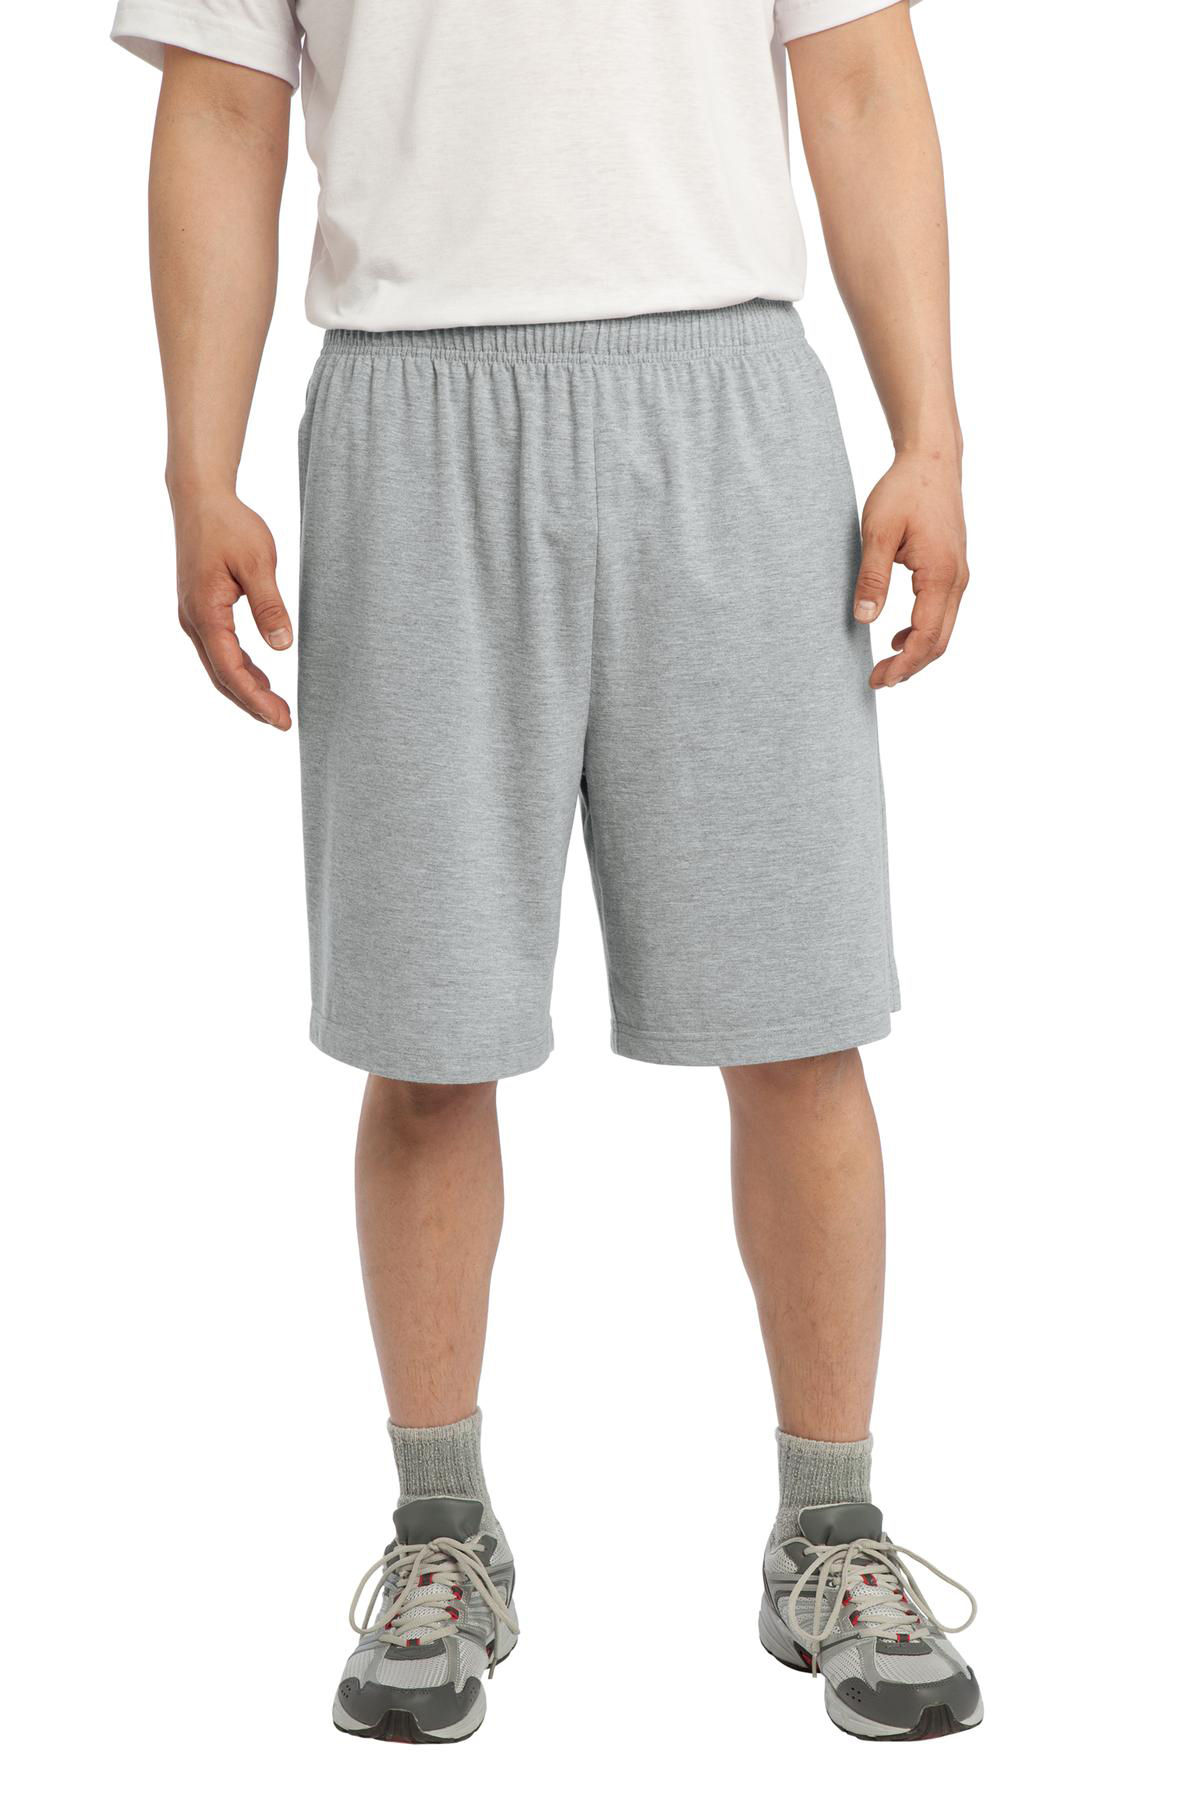 Sport-Tek Jersey Knit Short with Pockets, Product